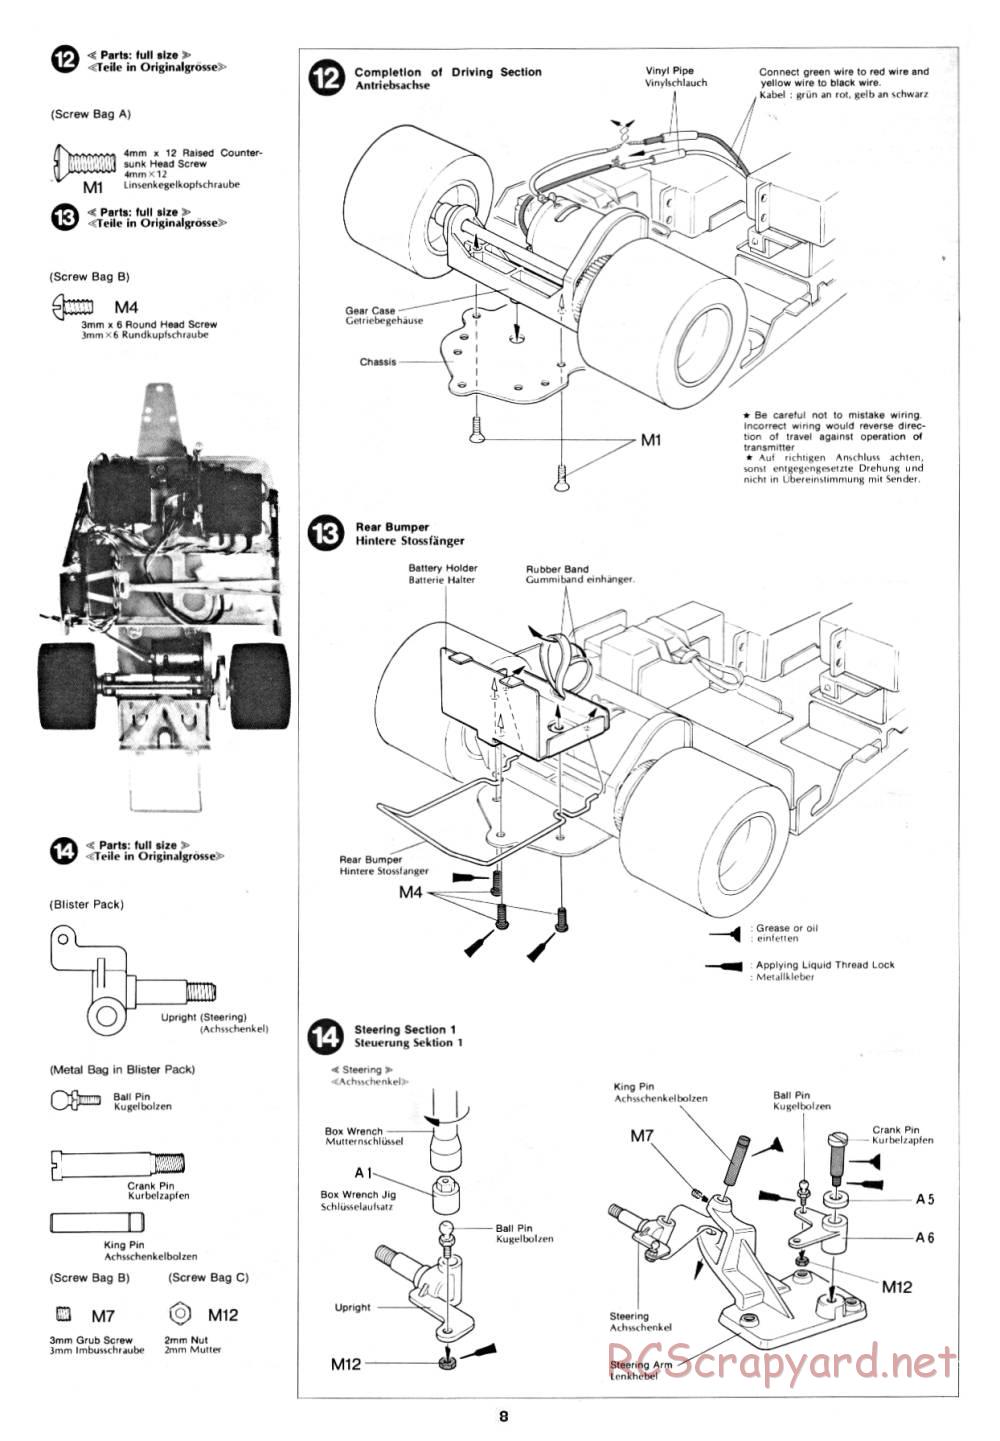 Tamiya - B2B Racing Sidecar - 58017 - Manual - Page 8